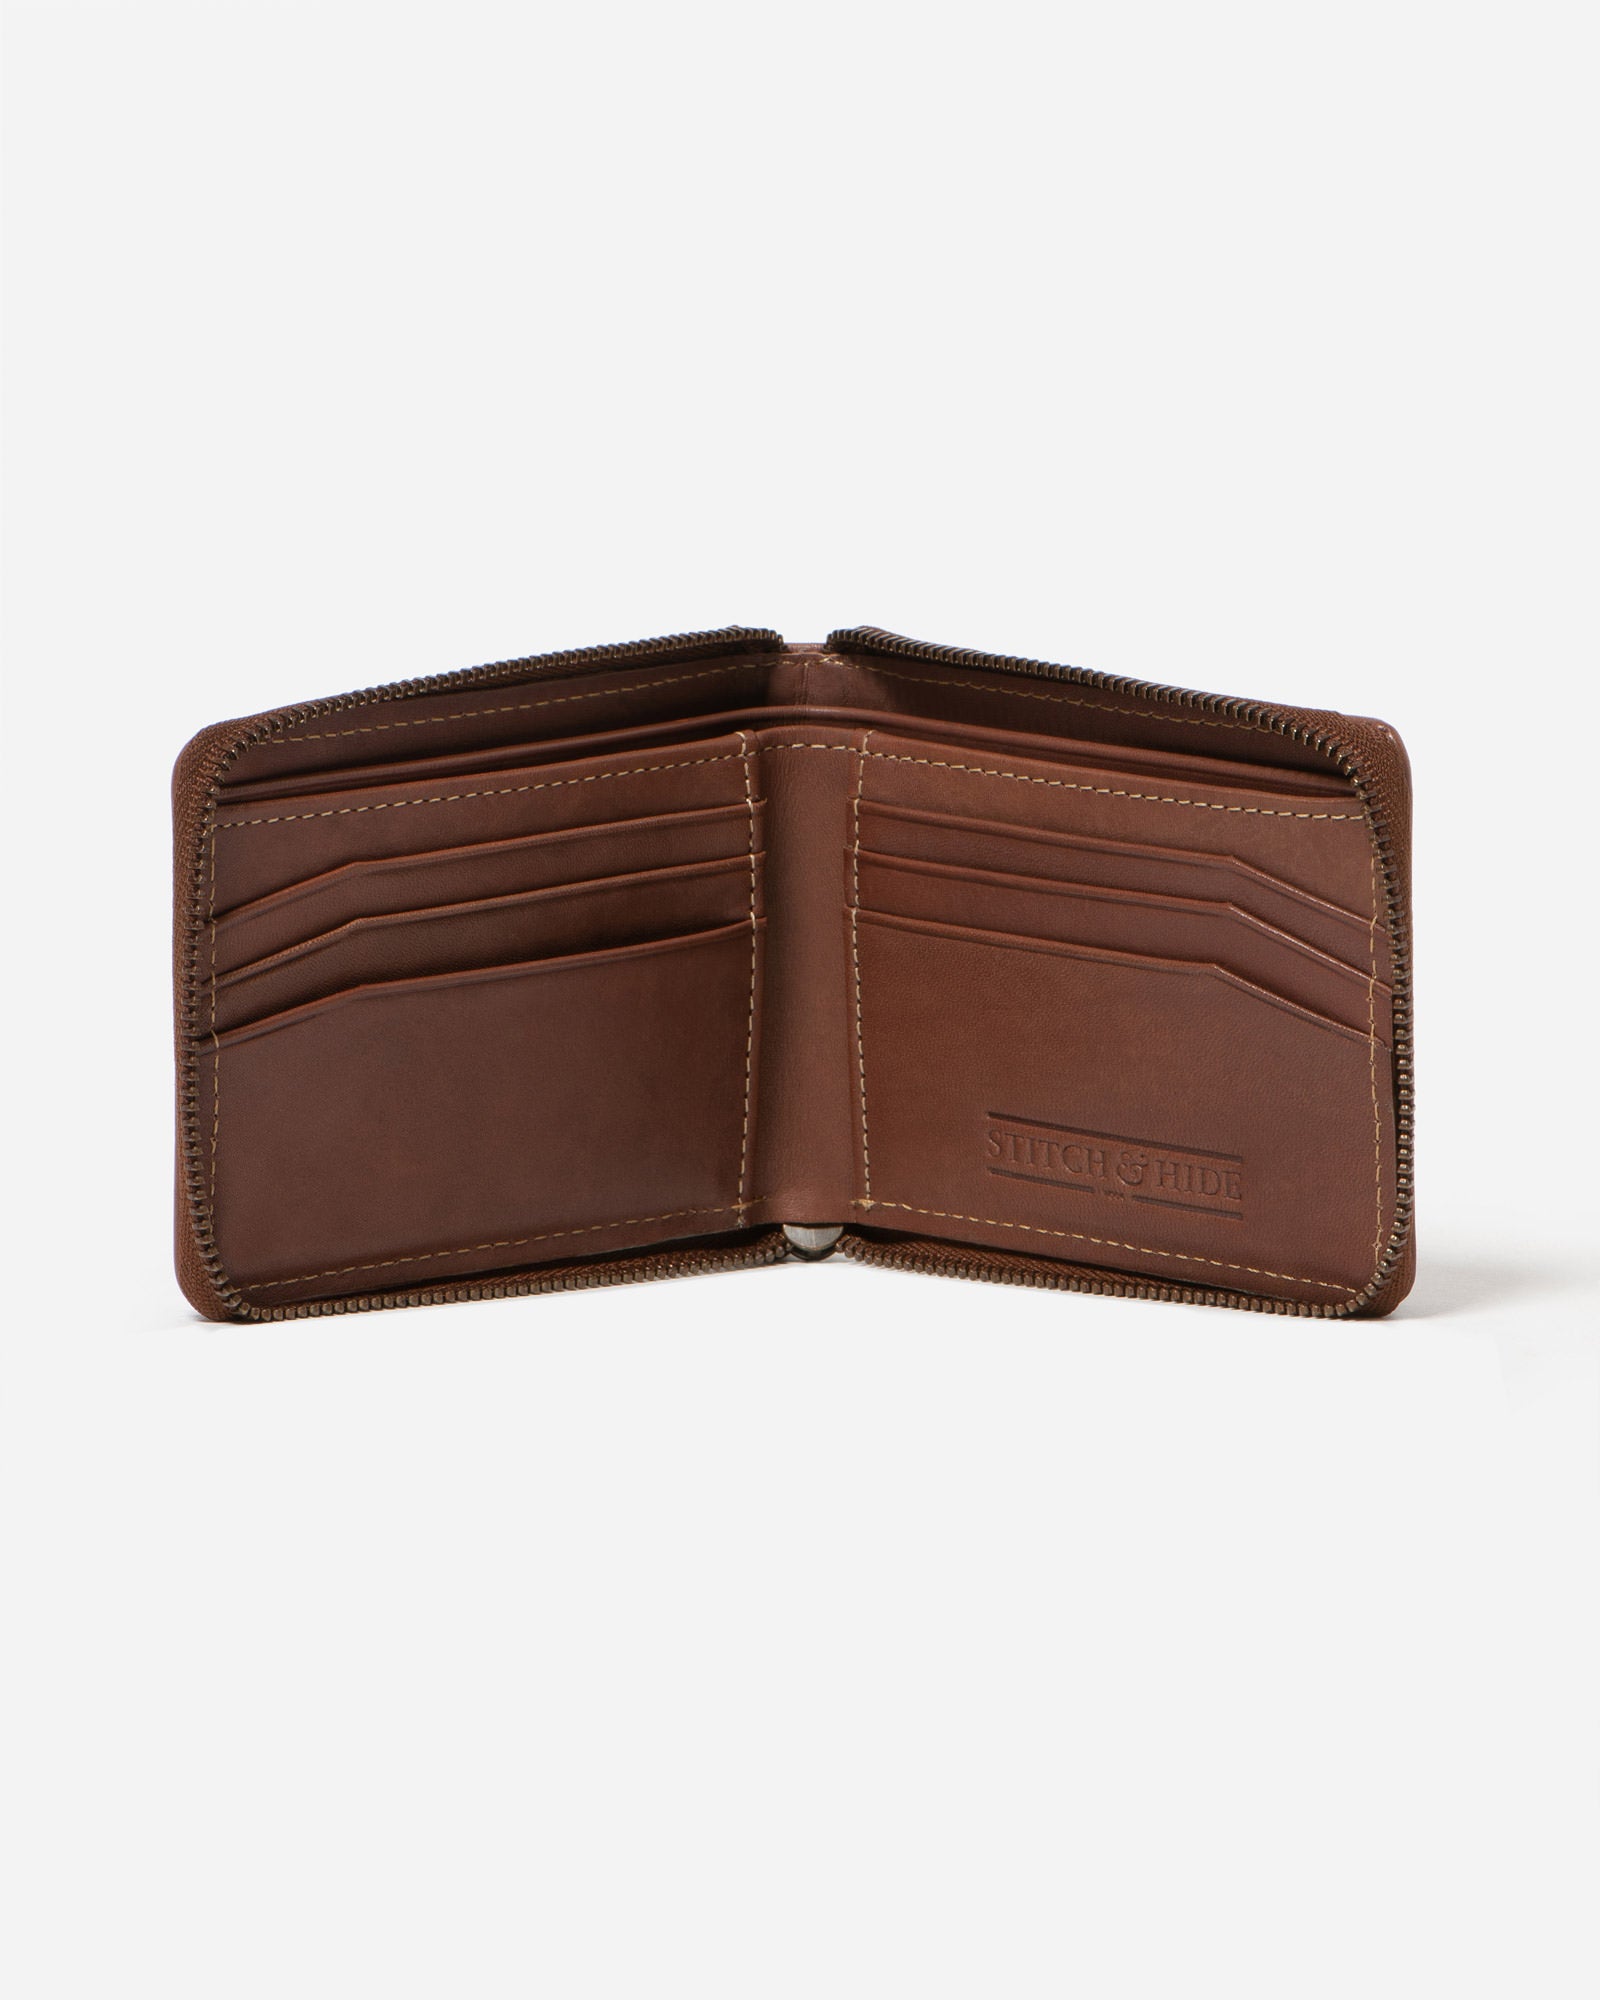 William Wallet - Bi-fold Leather Wallet for Men – Stitch & Hide